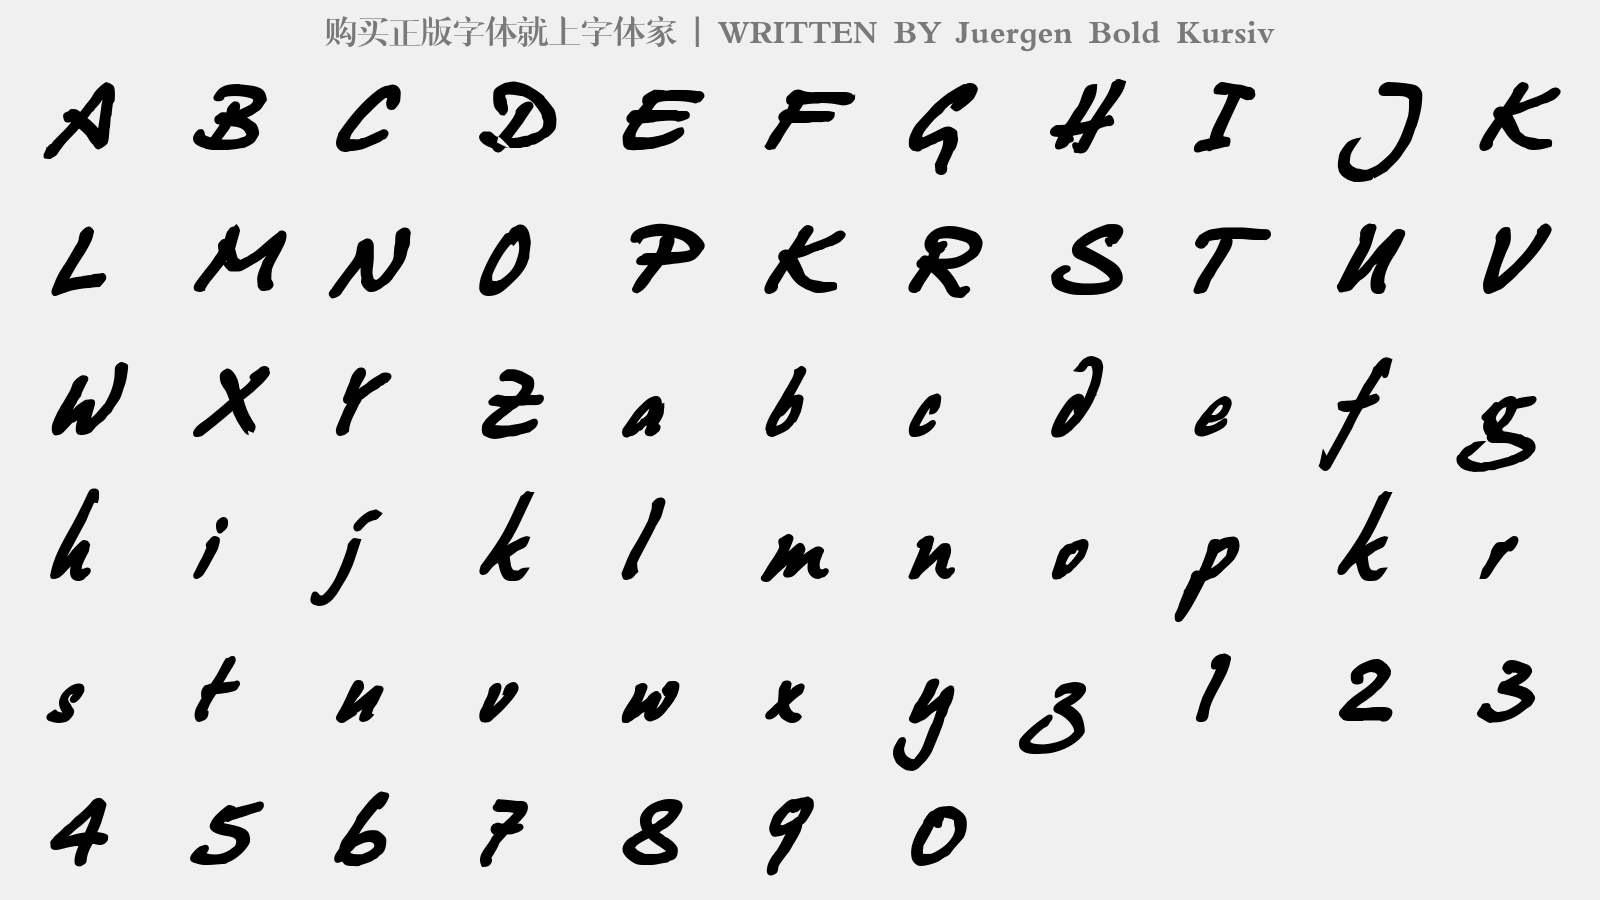 Juergen Bold Kursiv - 大写字母/小写字母/数字